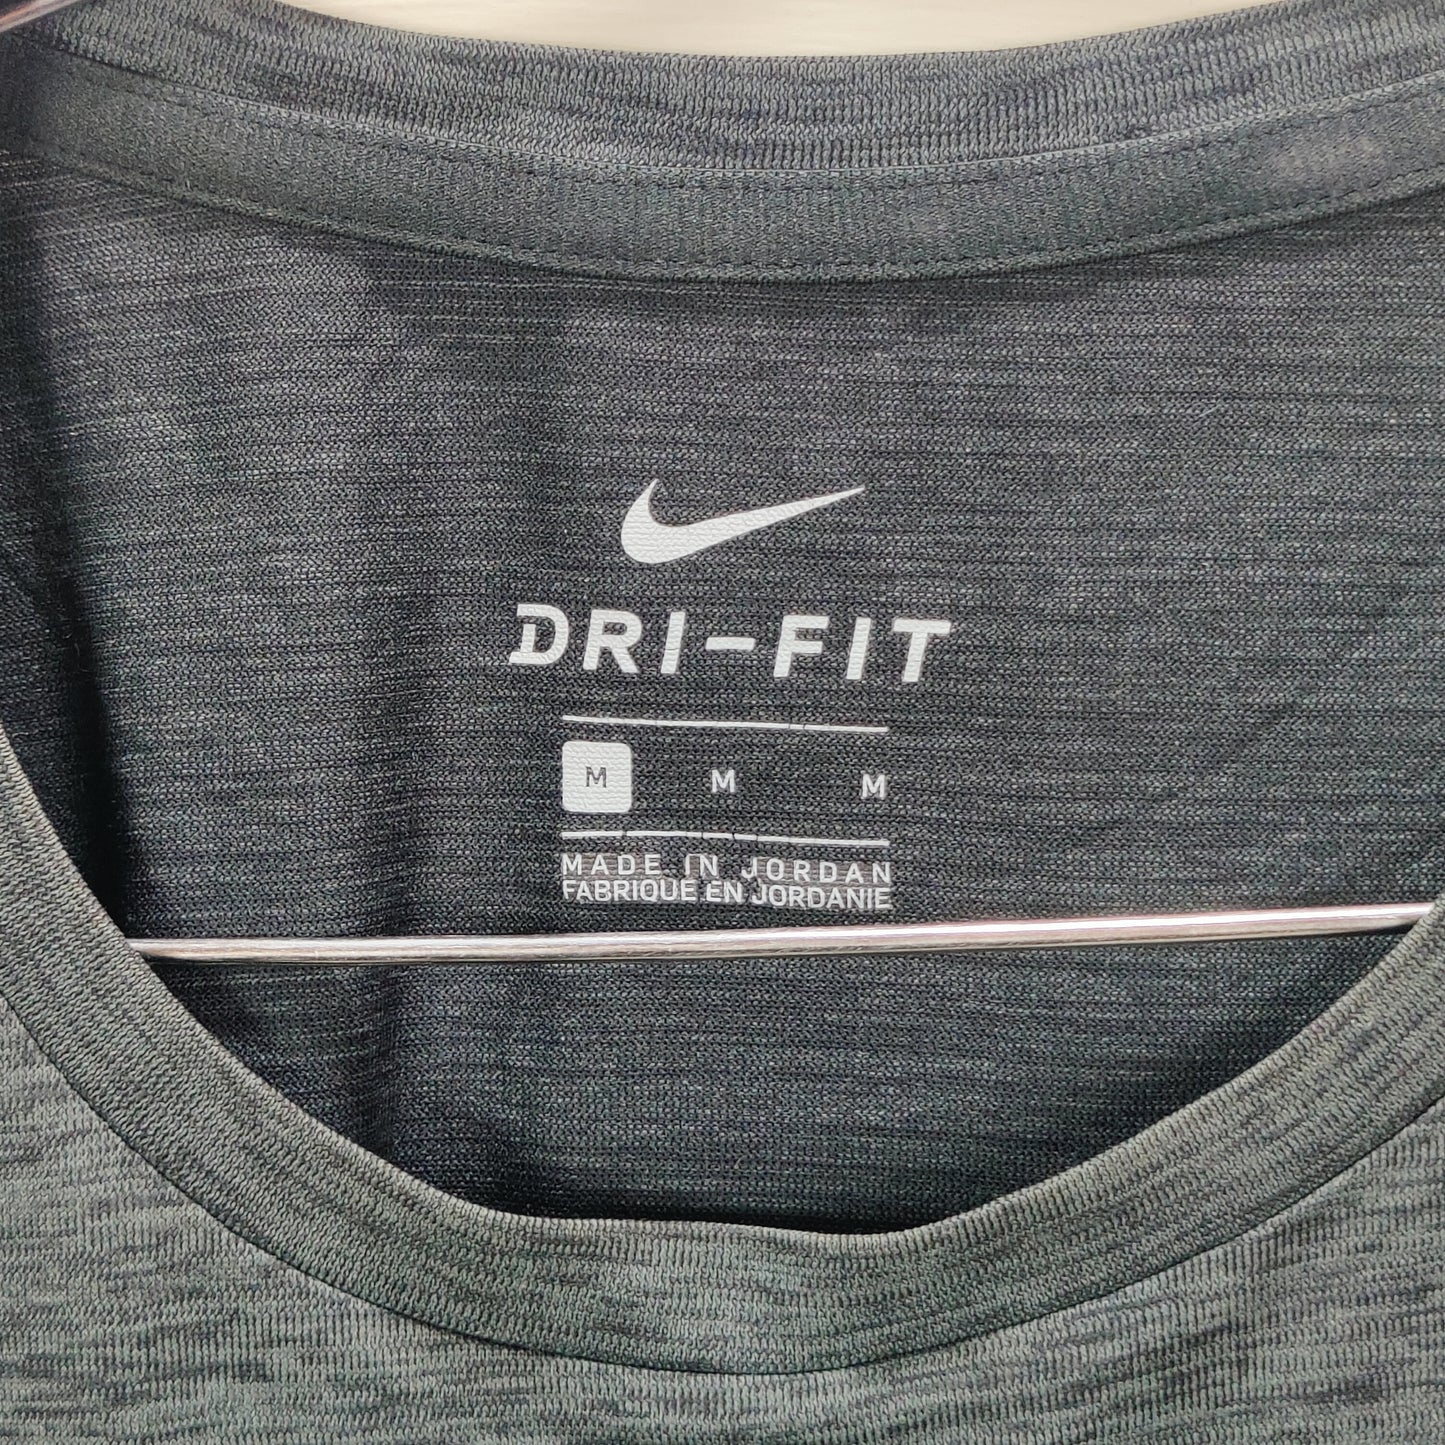 Nike DriFit - Charcoal - TS1012